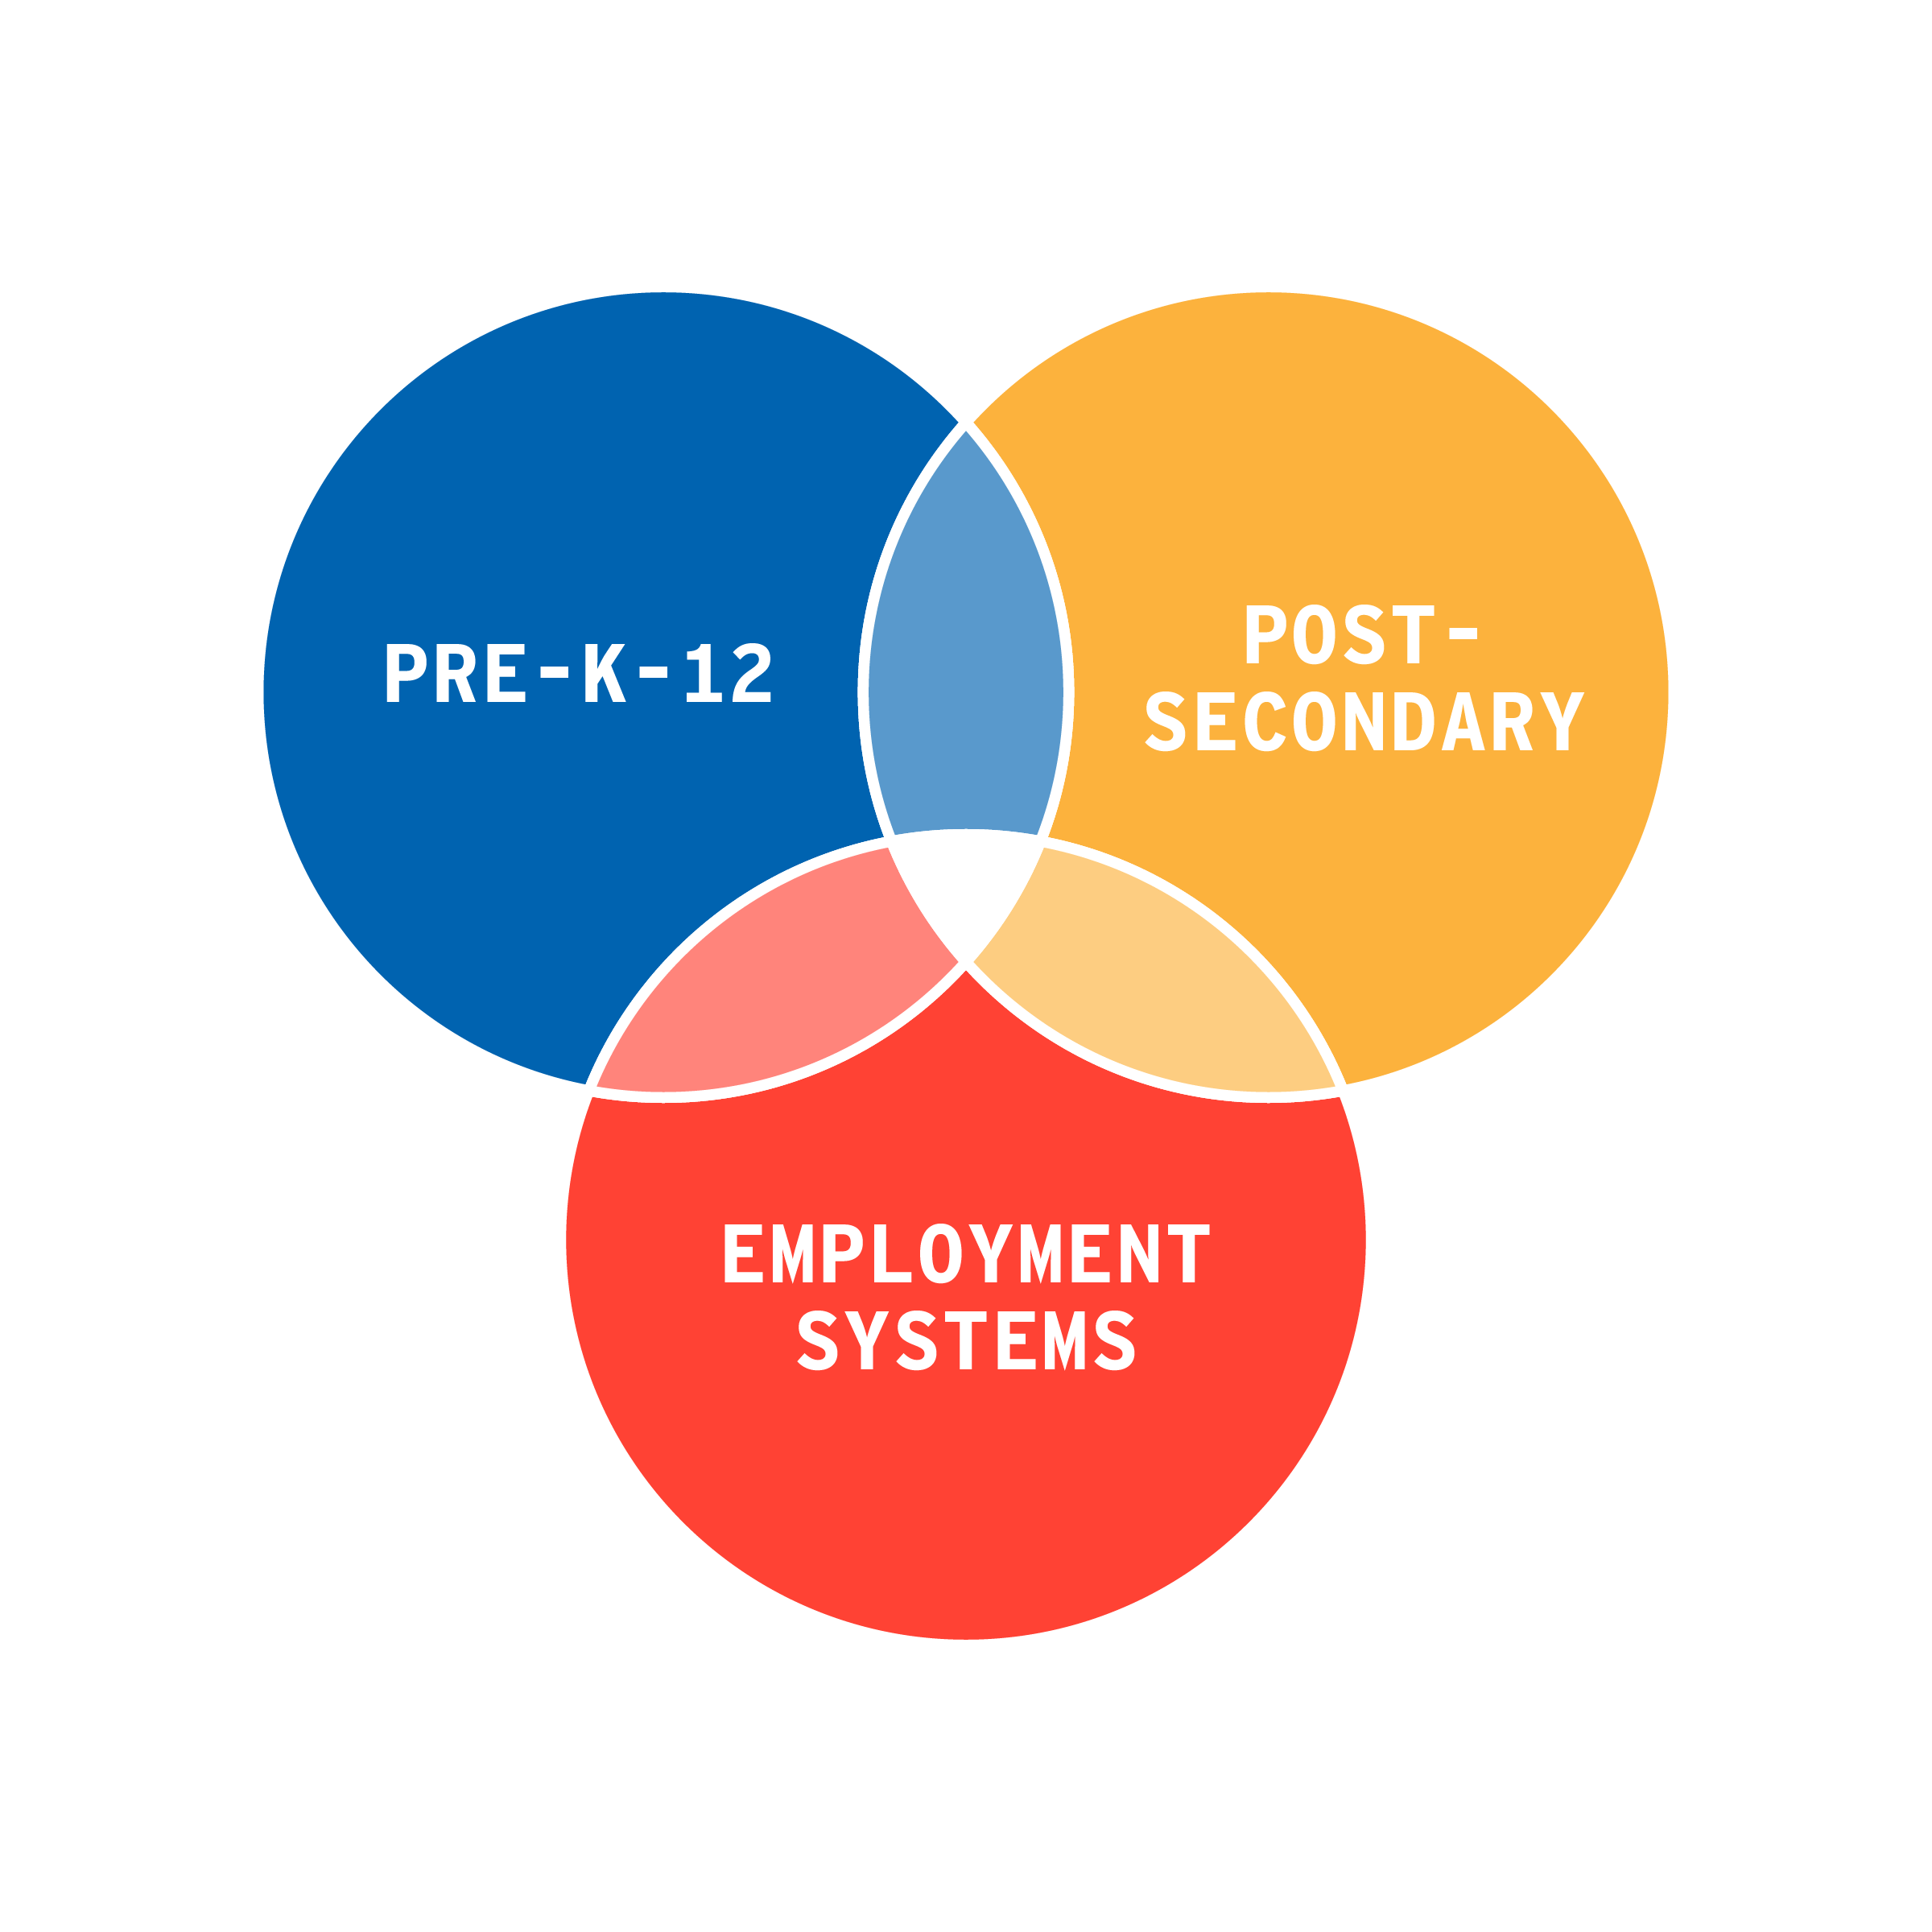 Pre-K-12, Post-Secondary, and Employment Systems venn diagram